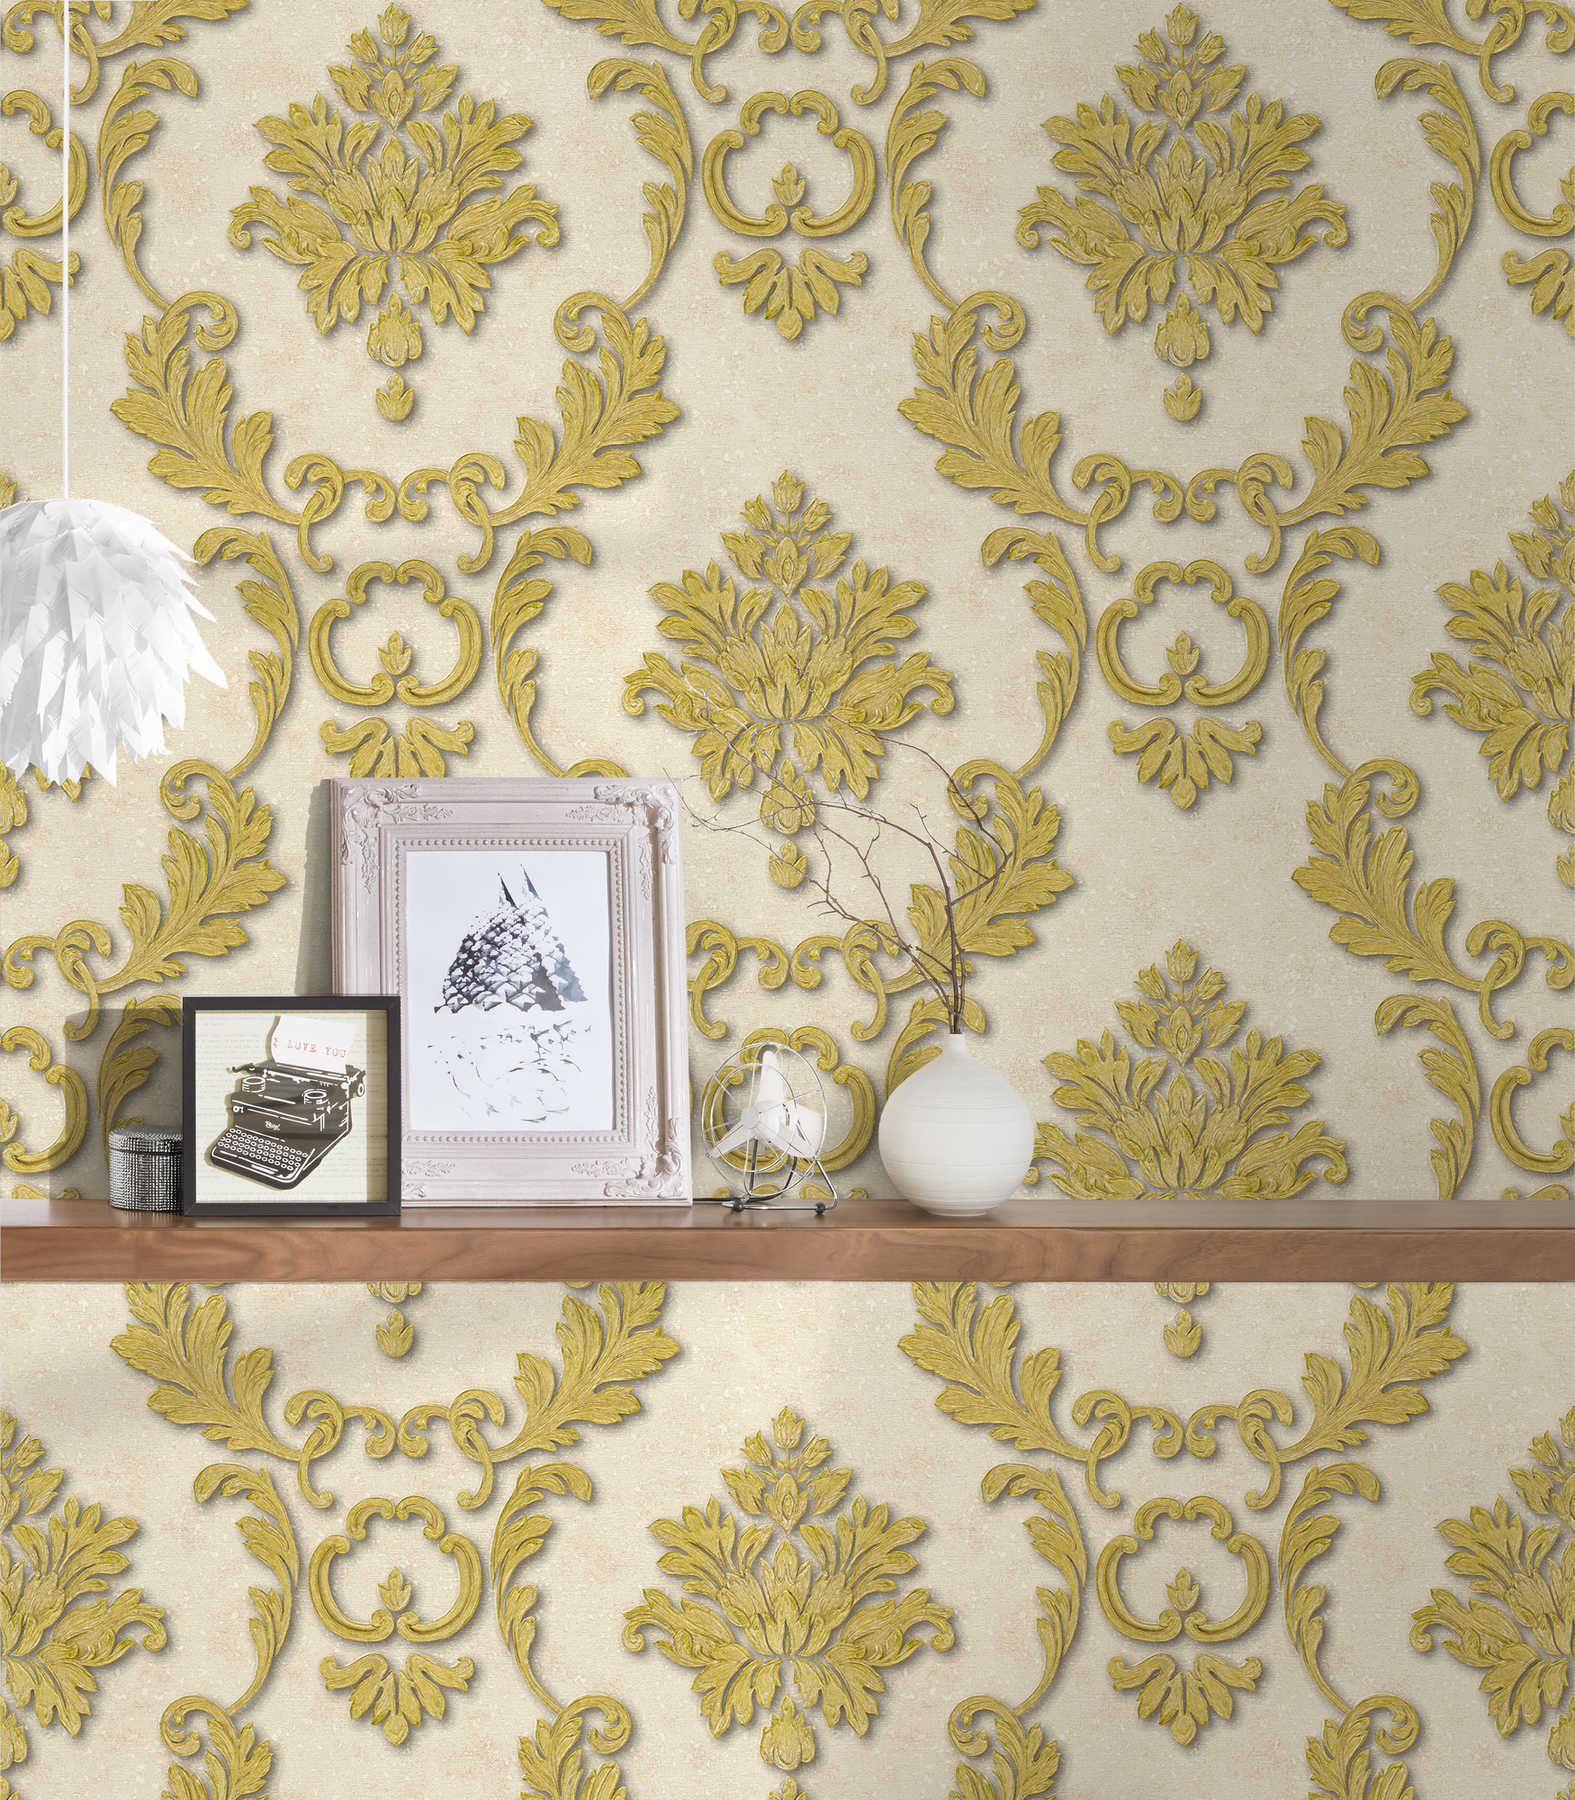             Designer wallpaper floral ornaments & metallic effect - cream, gold
        